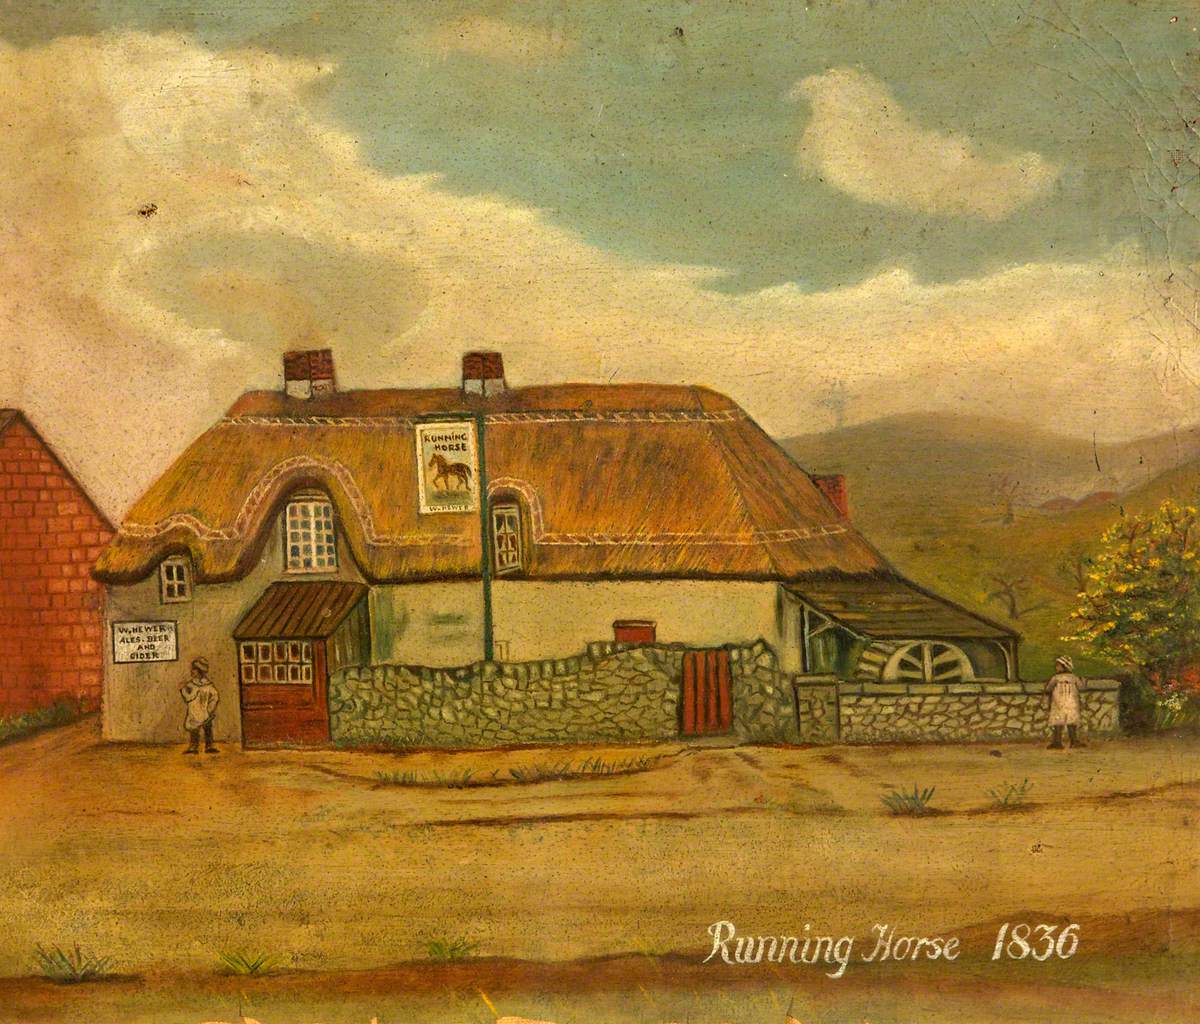 'Running Horse' Inn, 1836